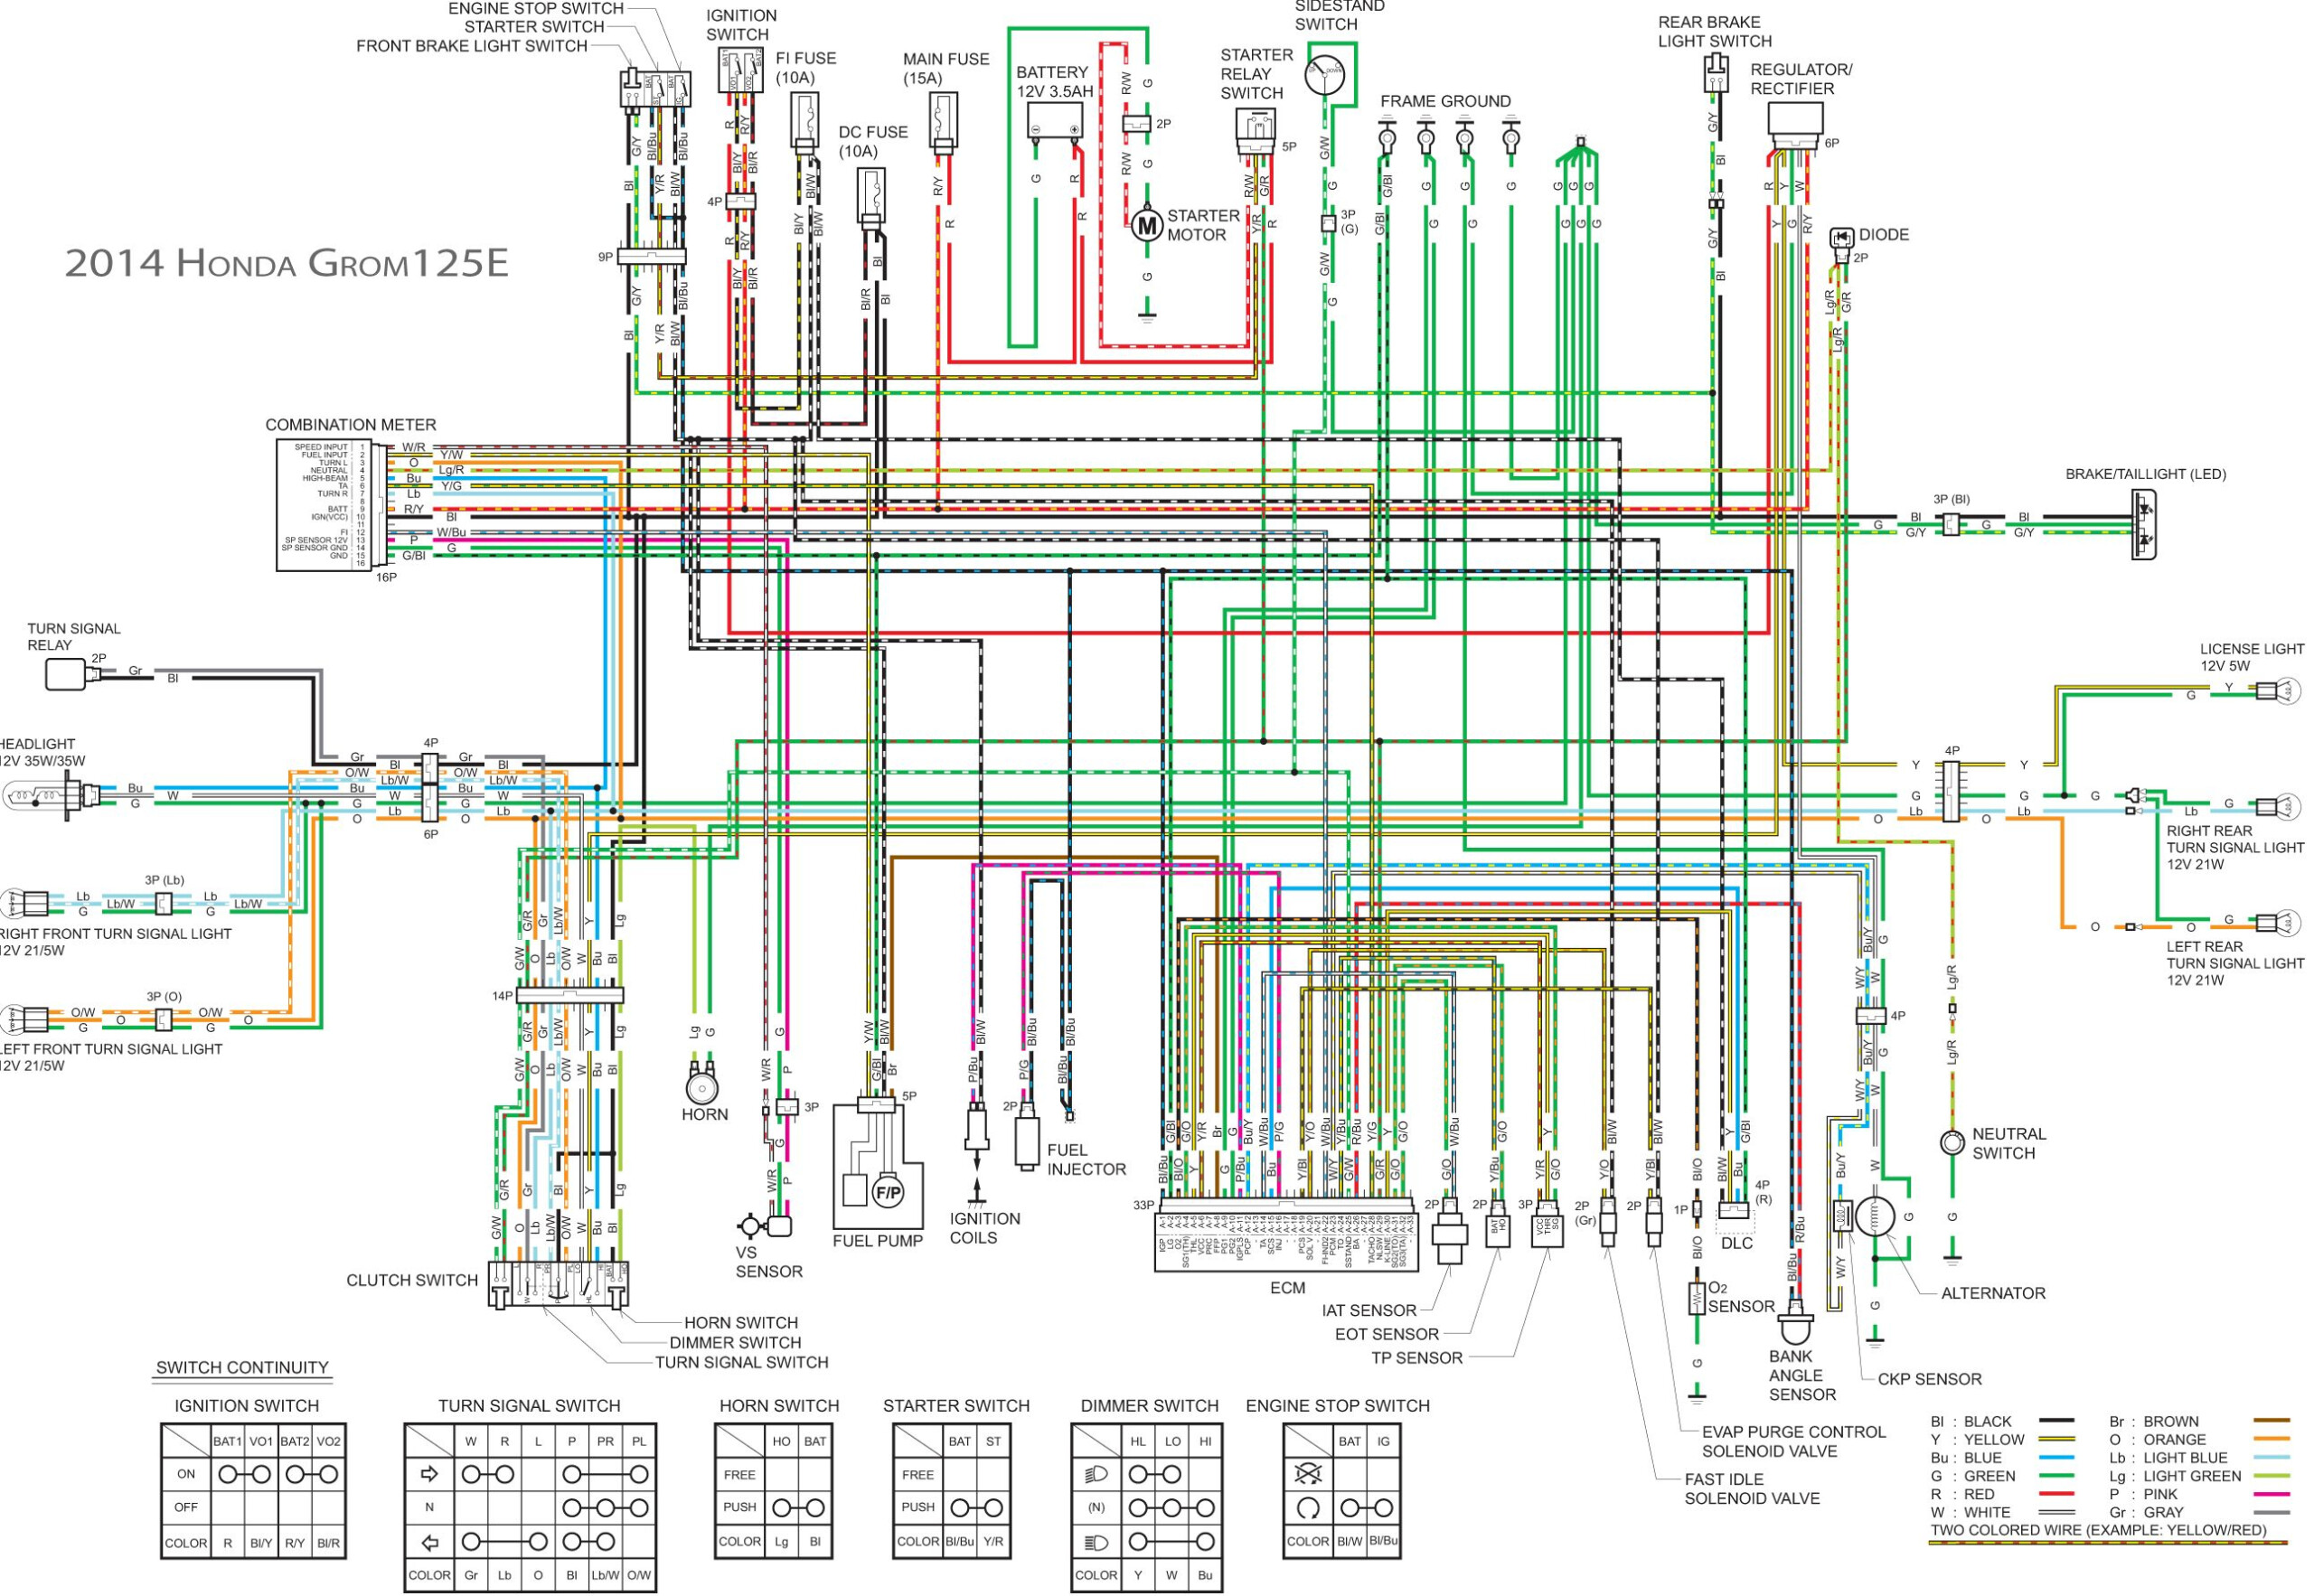 37 Honda Grom Tail Light Wiring Diagram Wiring Diagram Online Source